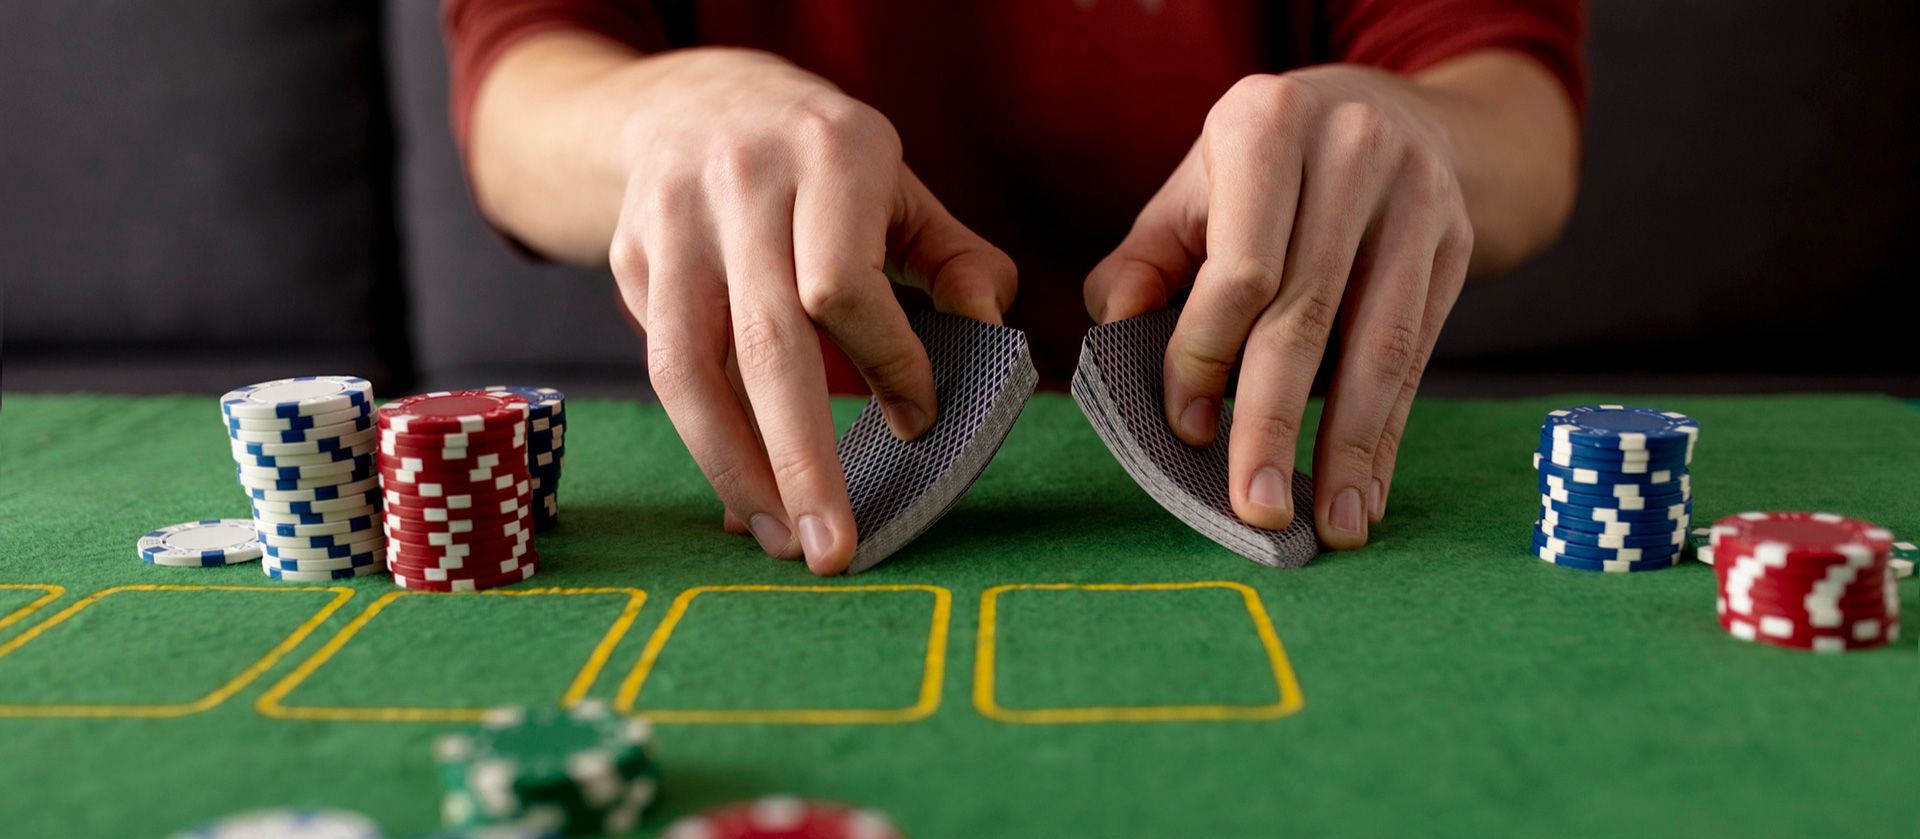 A man folds a poker game.